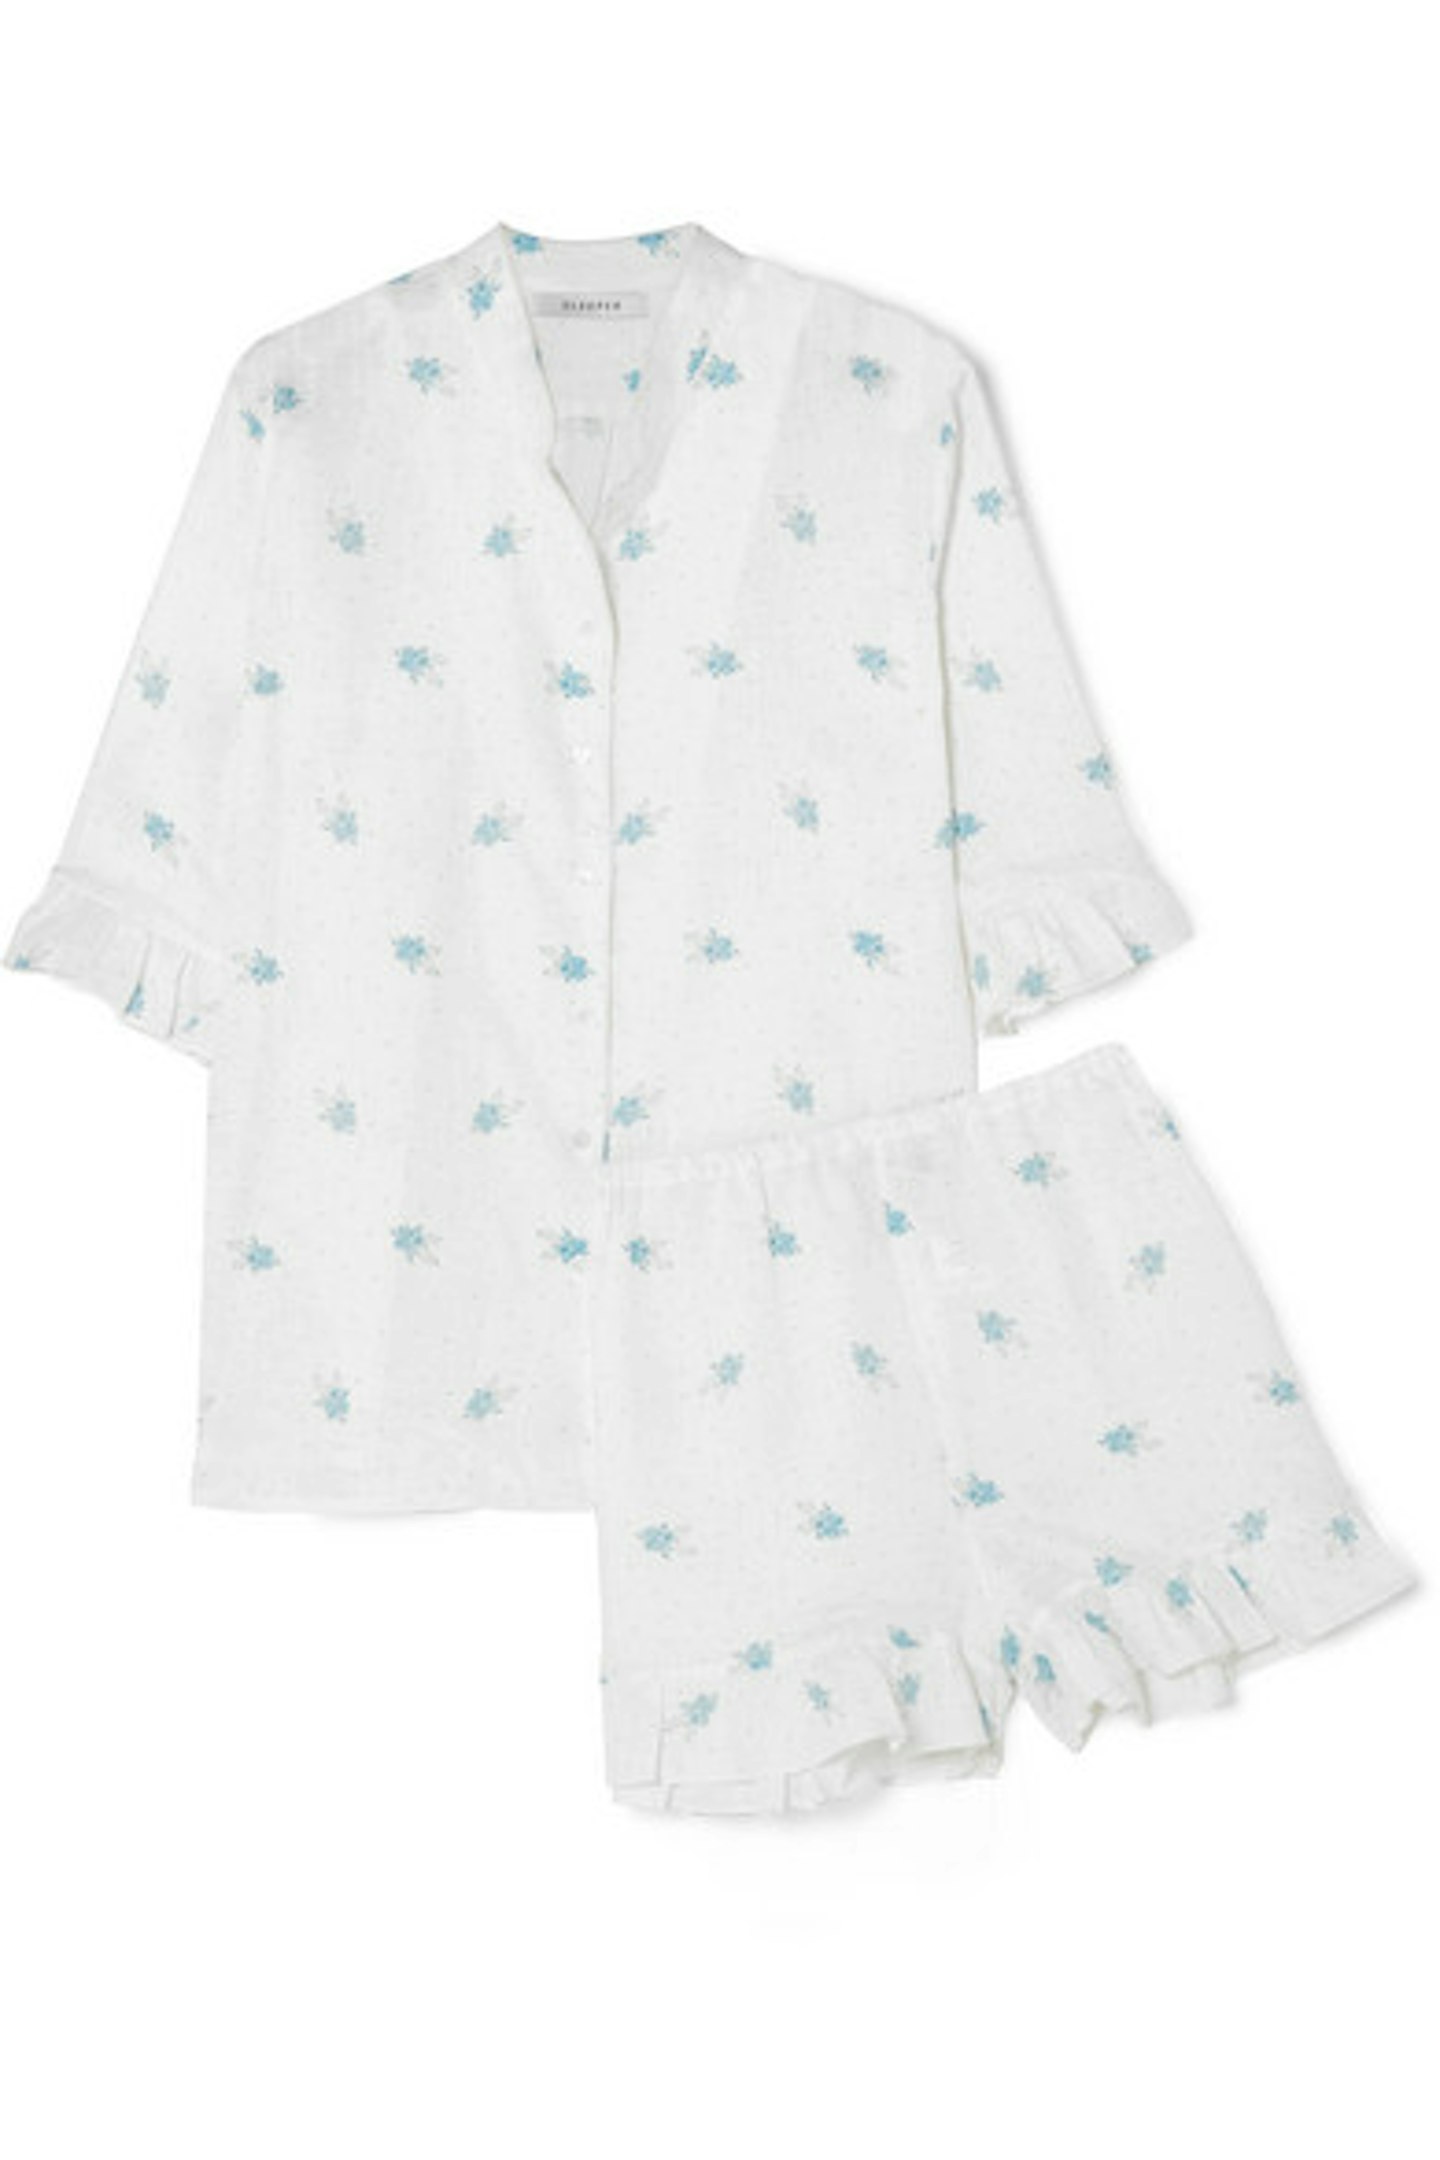 Sleeper, Ruffled Floral Print Pyjama Set, £199